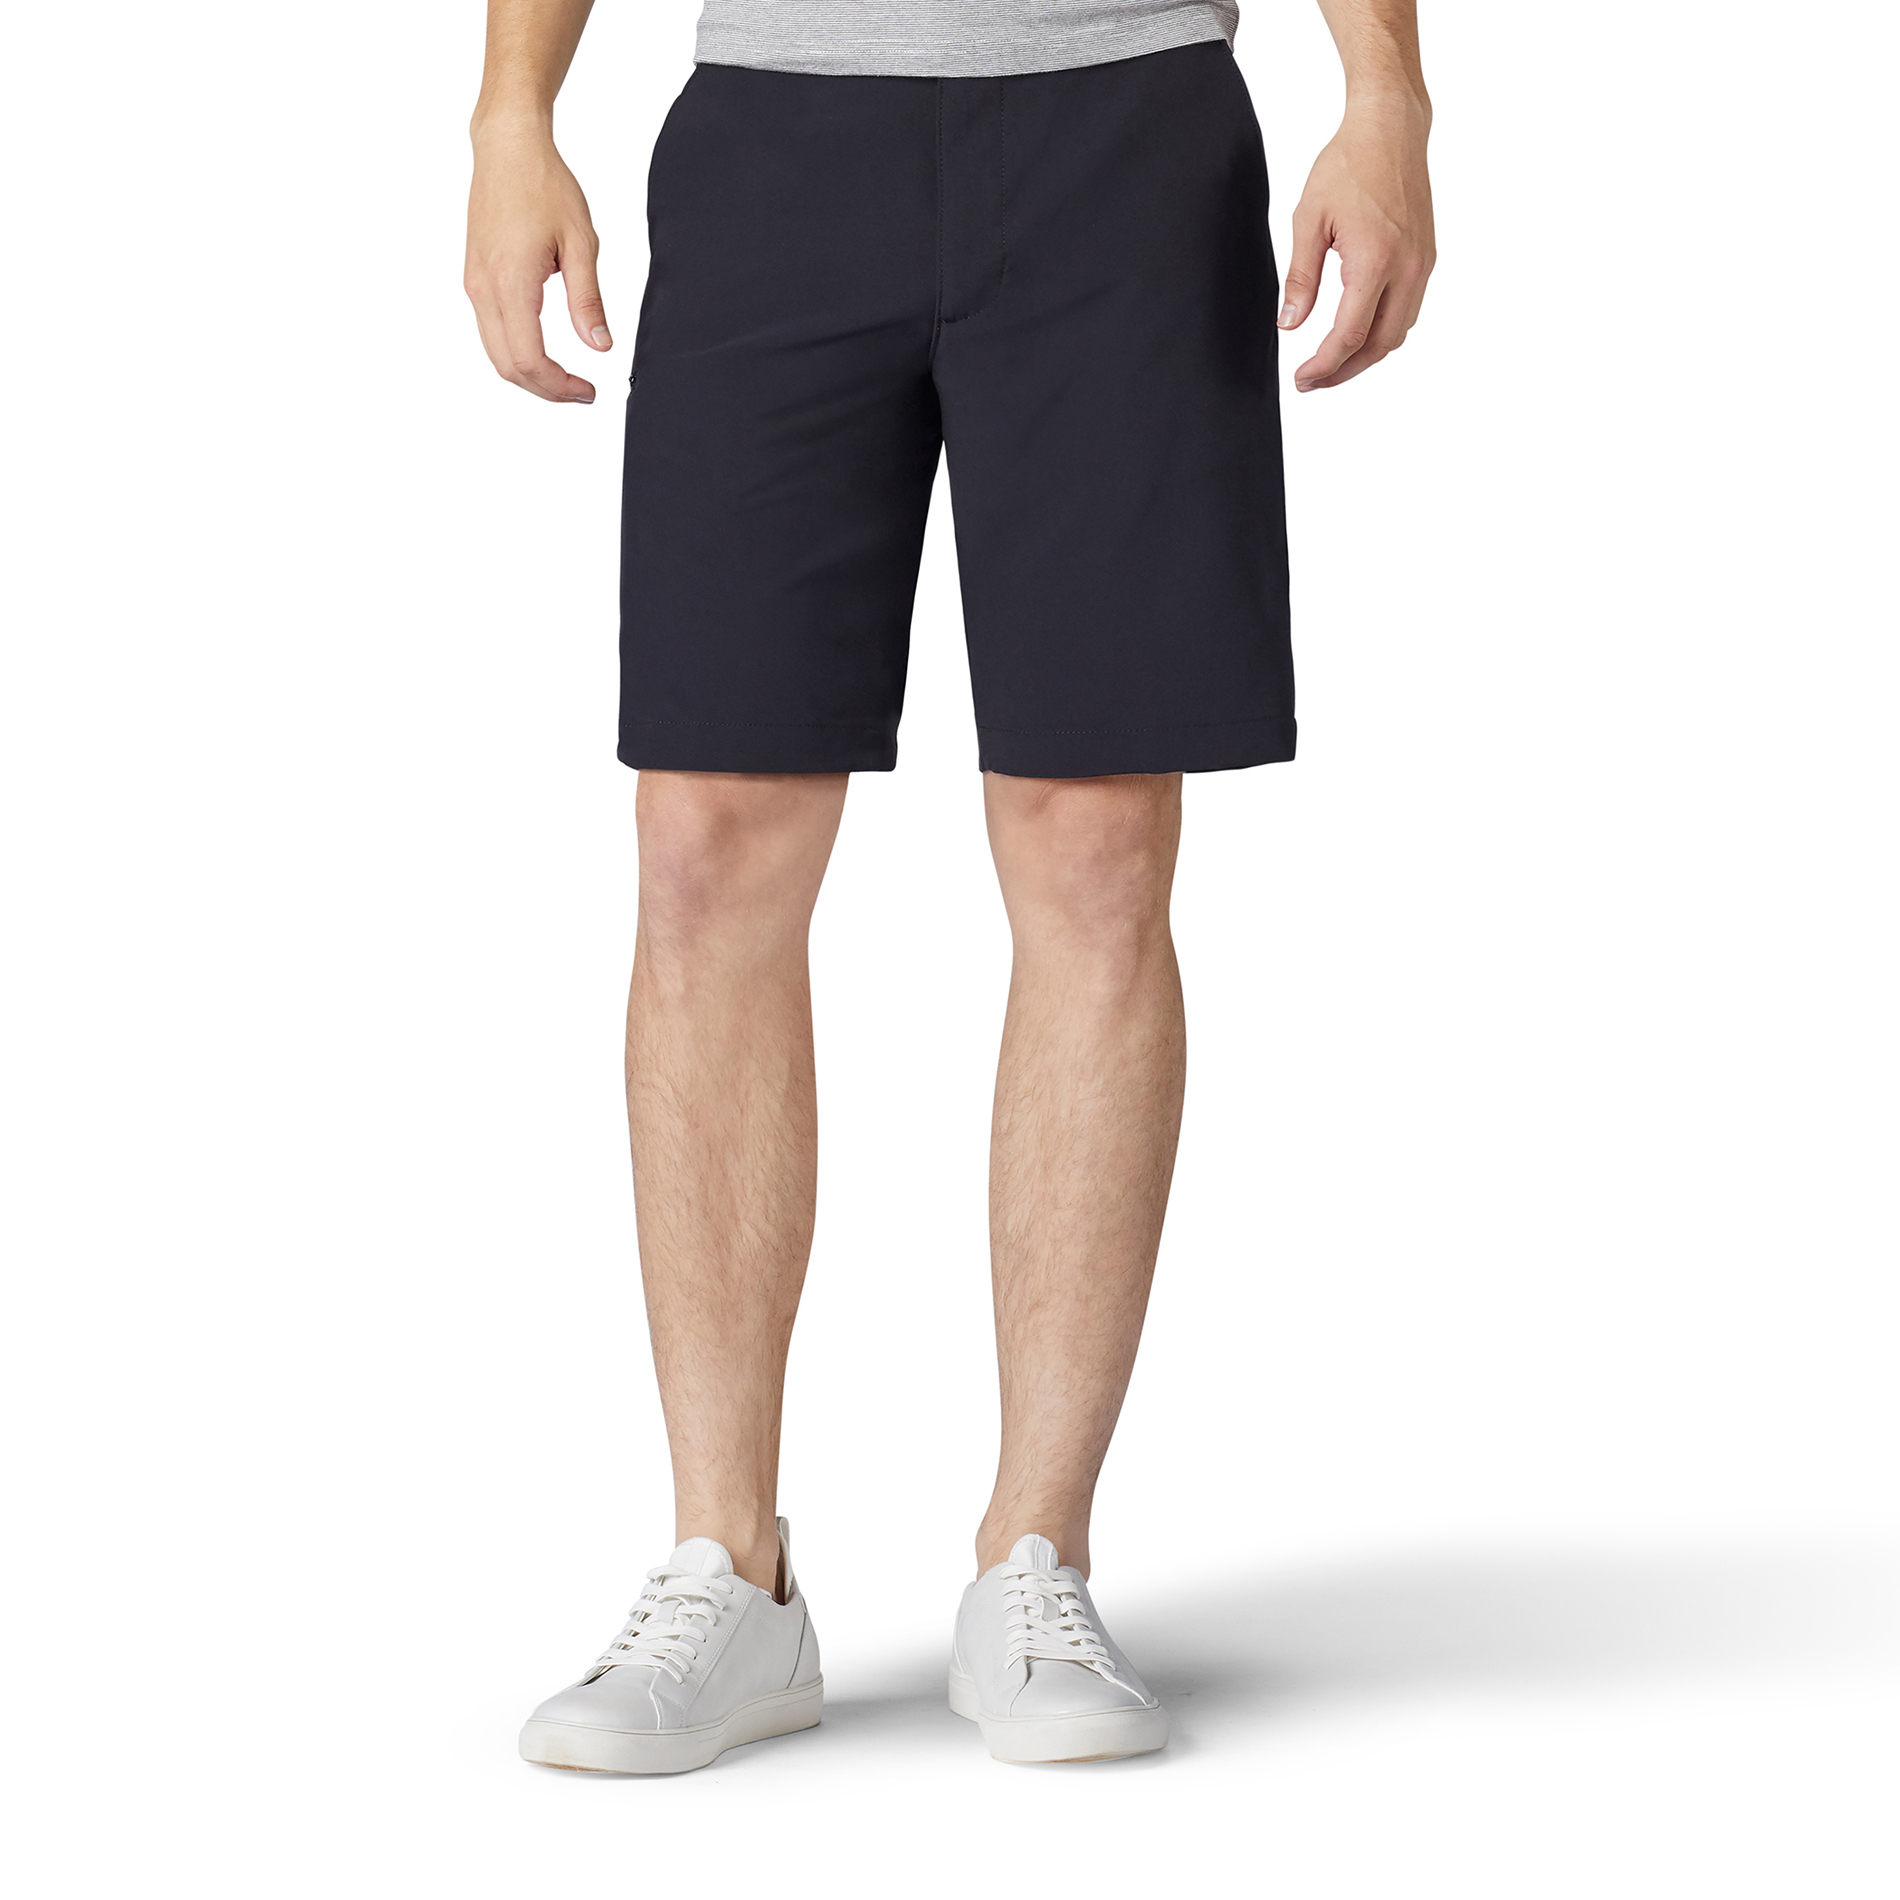 LEE Men’s Tri-Flex Shorts